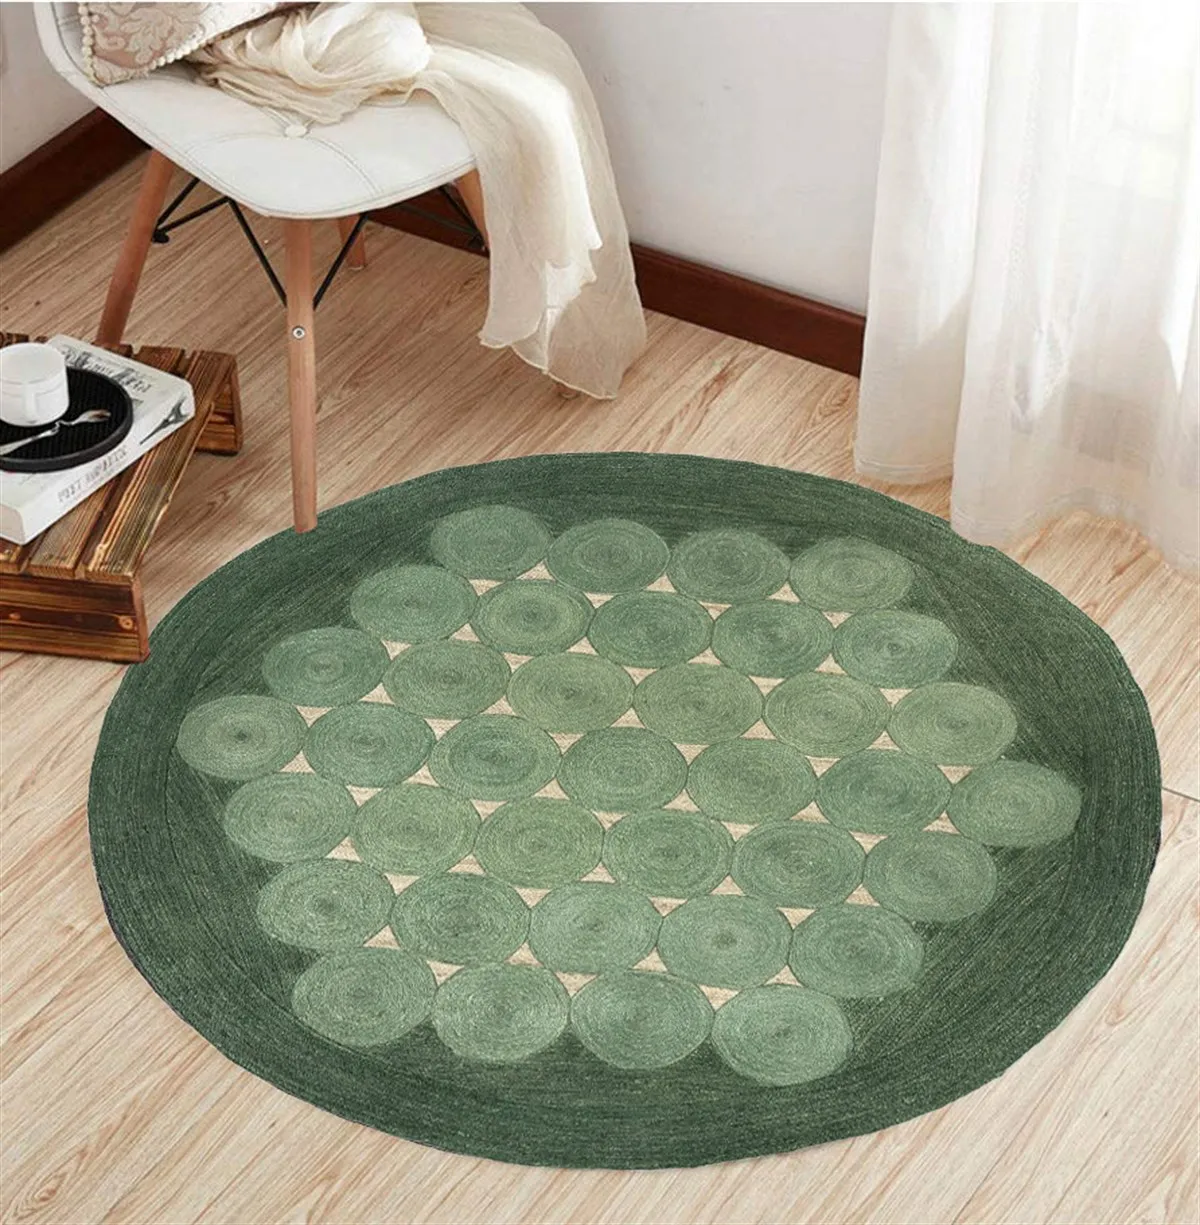 MarkaEv Green Jute Looking Round Decorative Carpet 077 75x75 cm Oval Modern Kitchen Rug